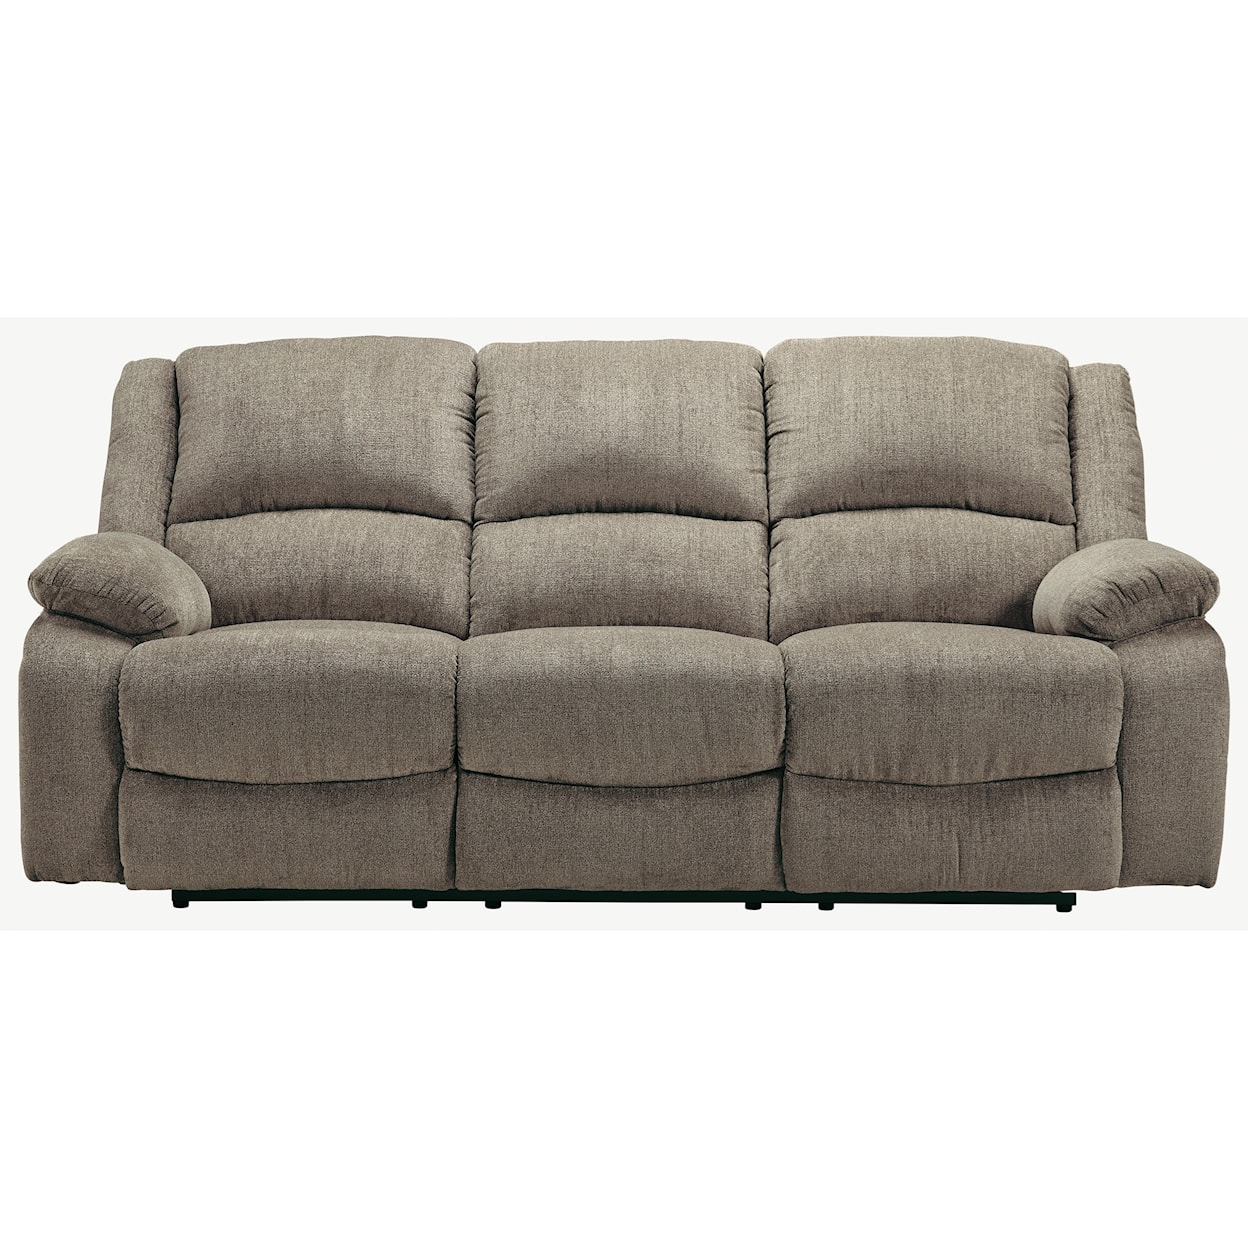 Ashley Furniture Signature Design Draycoll Reclining Power Sofa